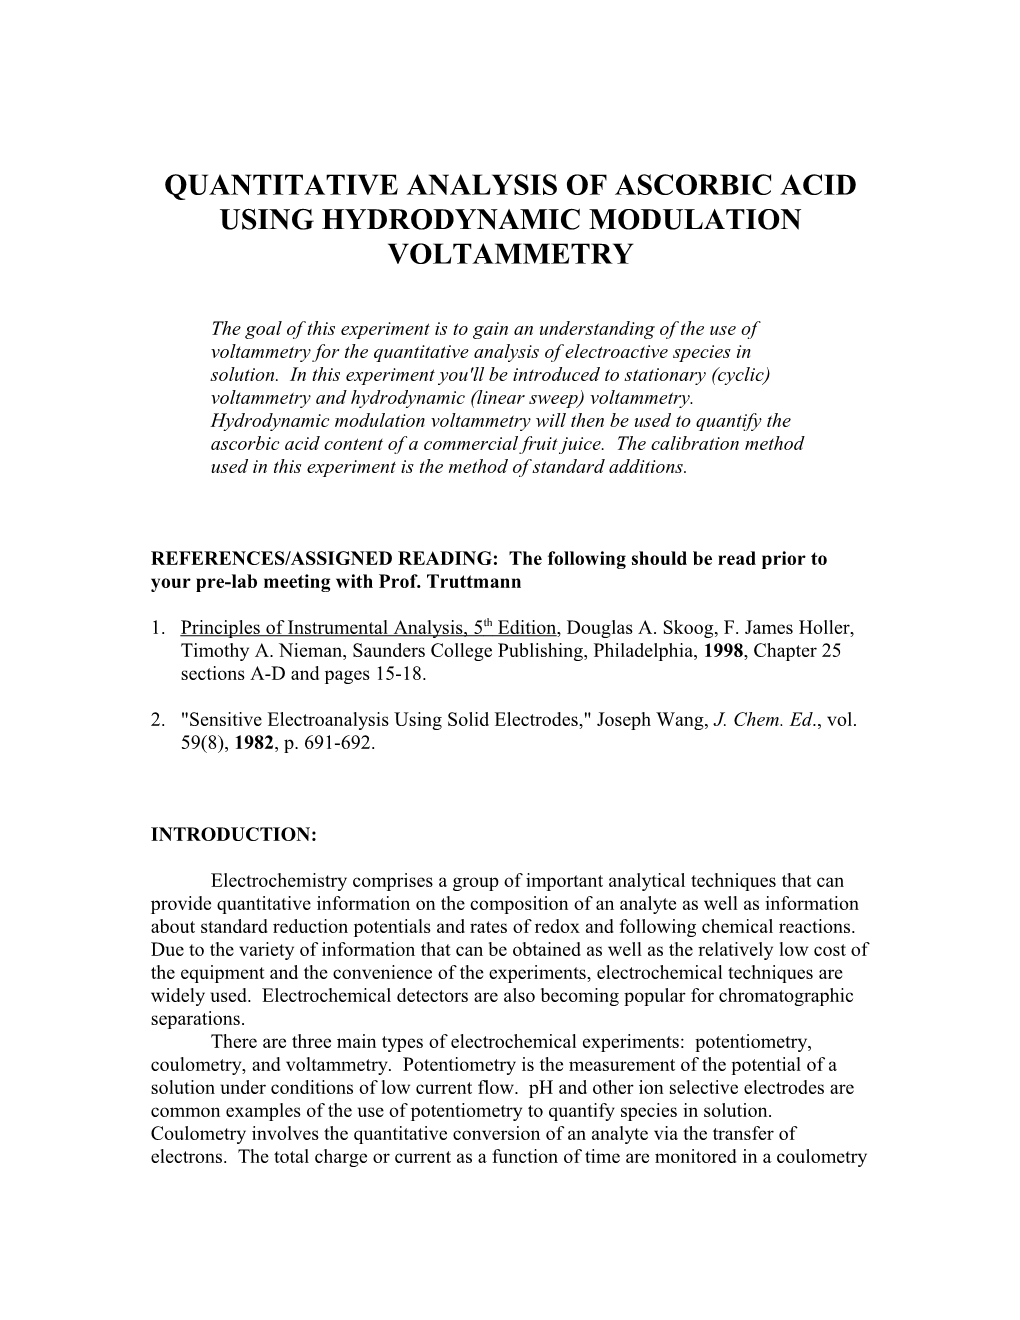 Quantitative Analysis of Ascorbic Acid Using Hydrodynamic Modulation Voltammetry